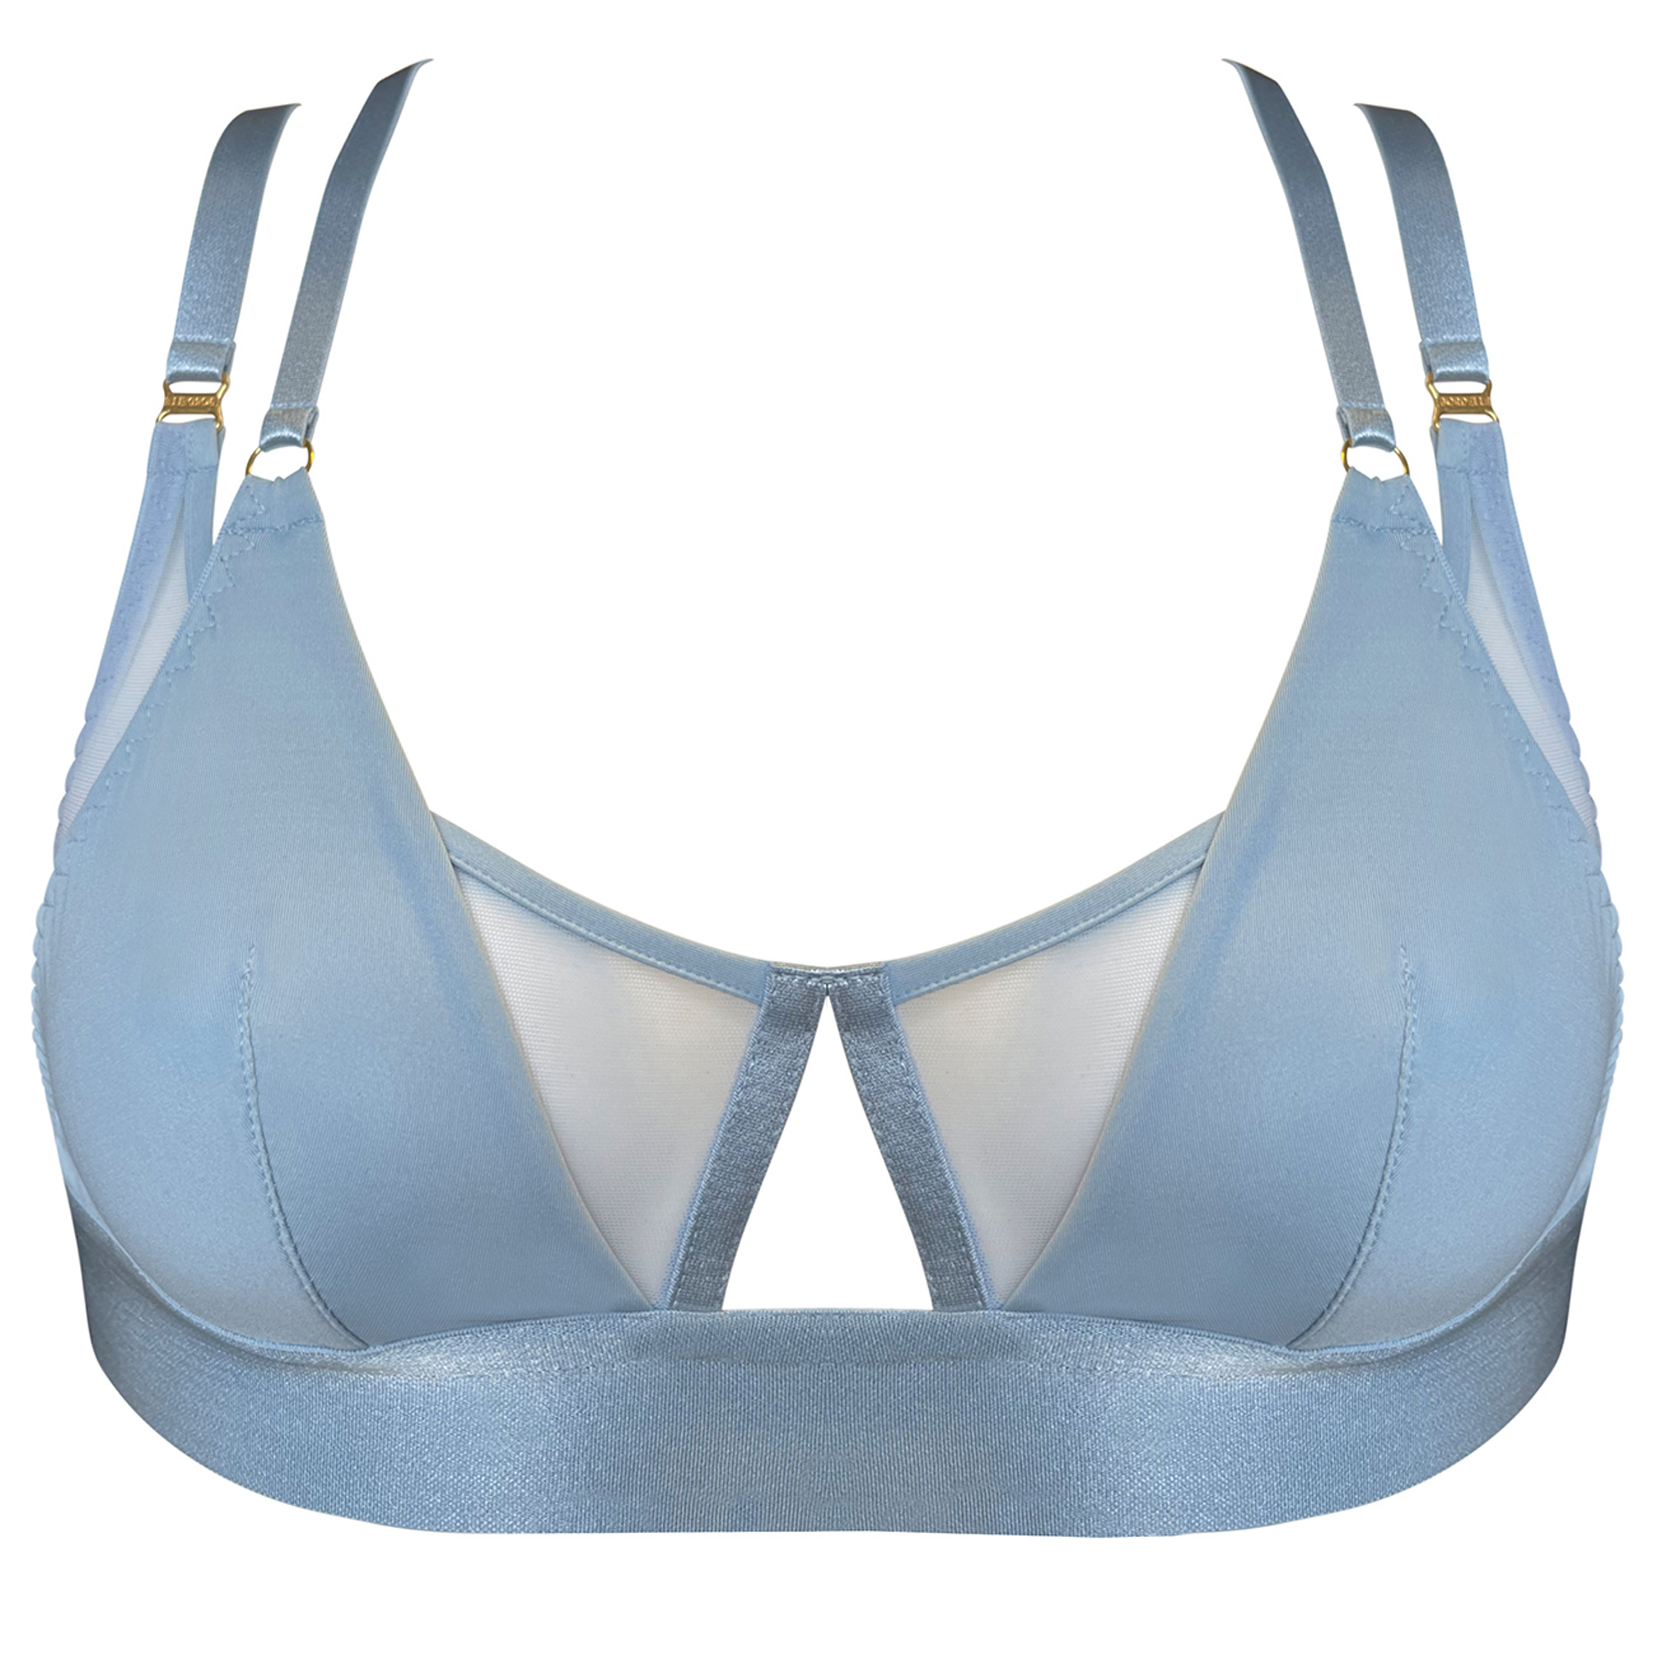 Vero soft cup bra by Bordelle - dusty blue